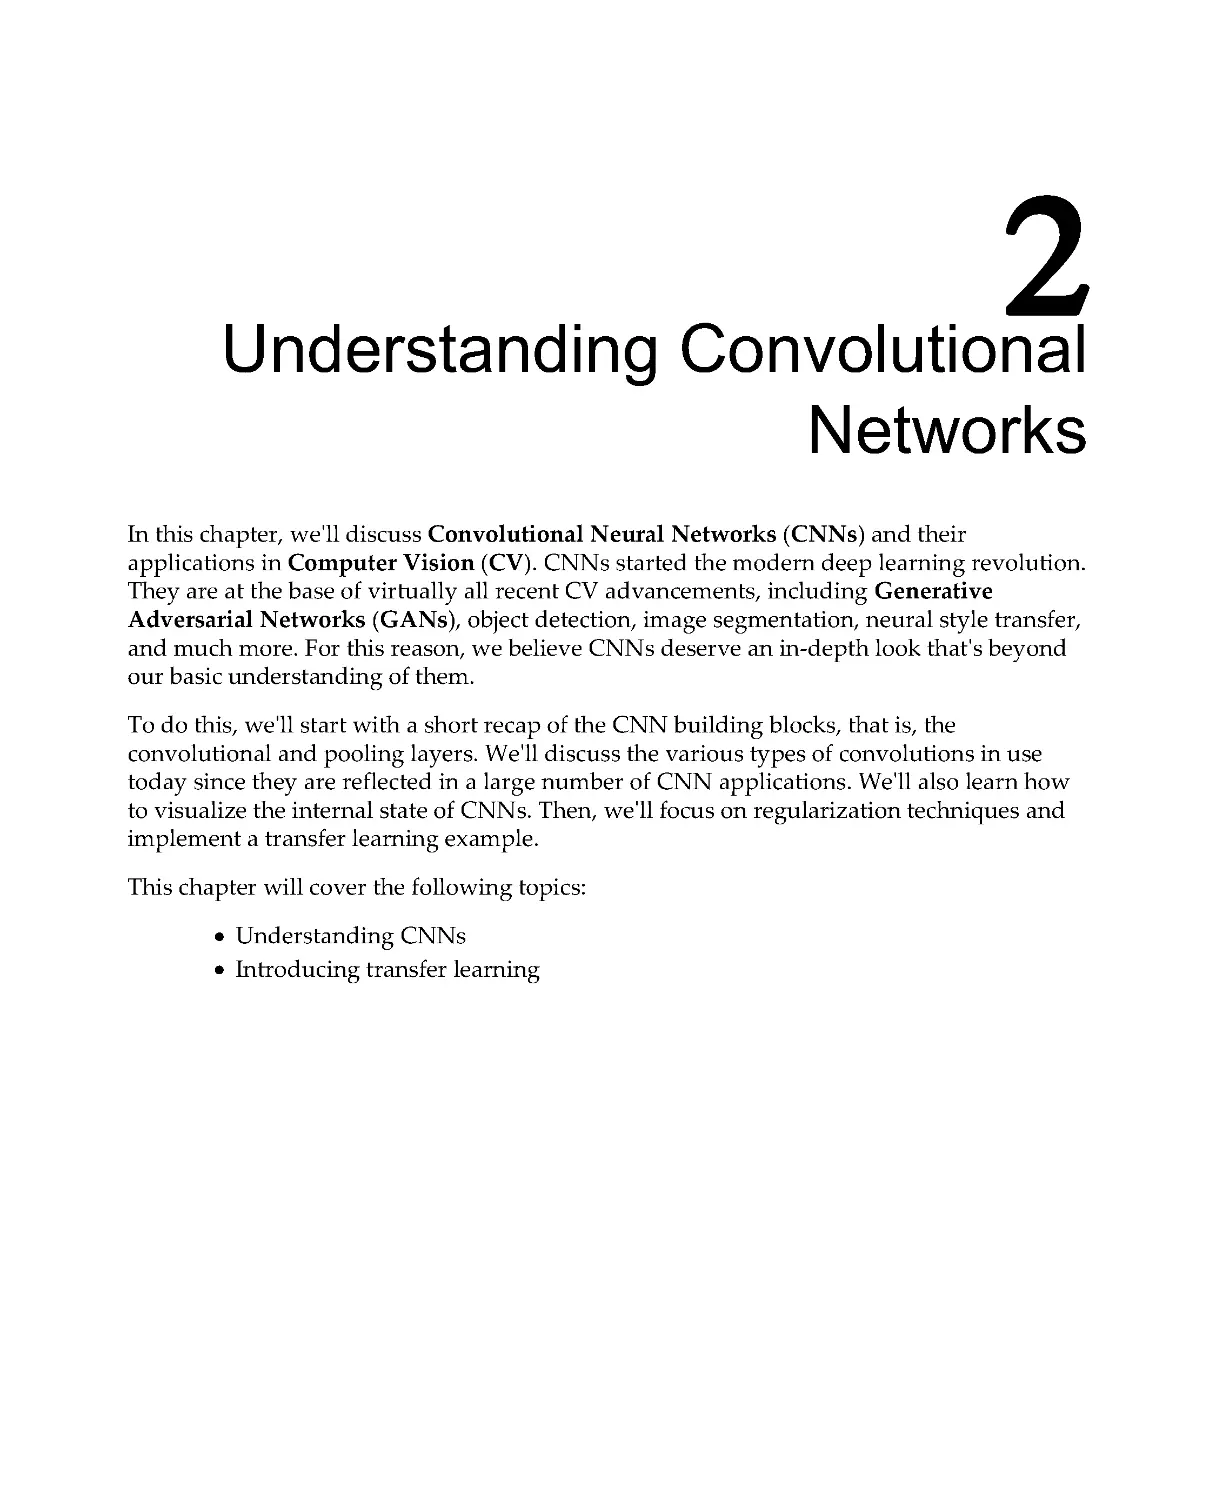 Chapter 2: Understanding Convolutional Networks